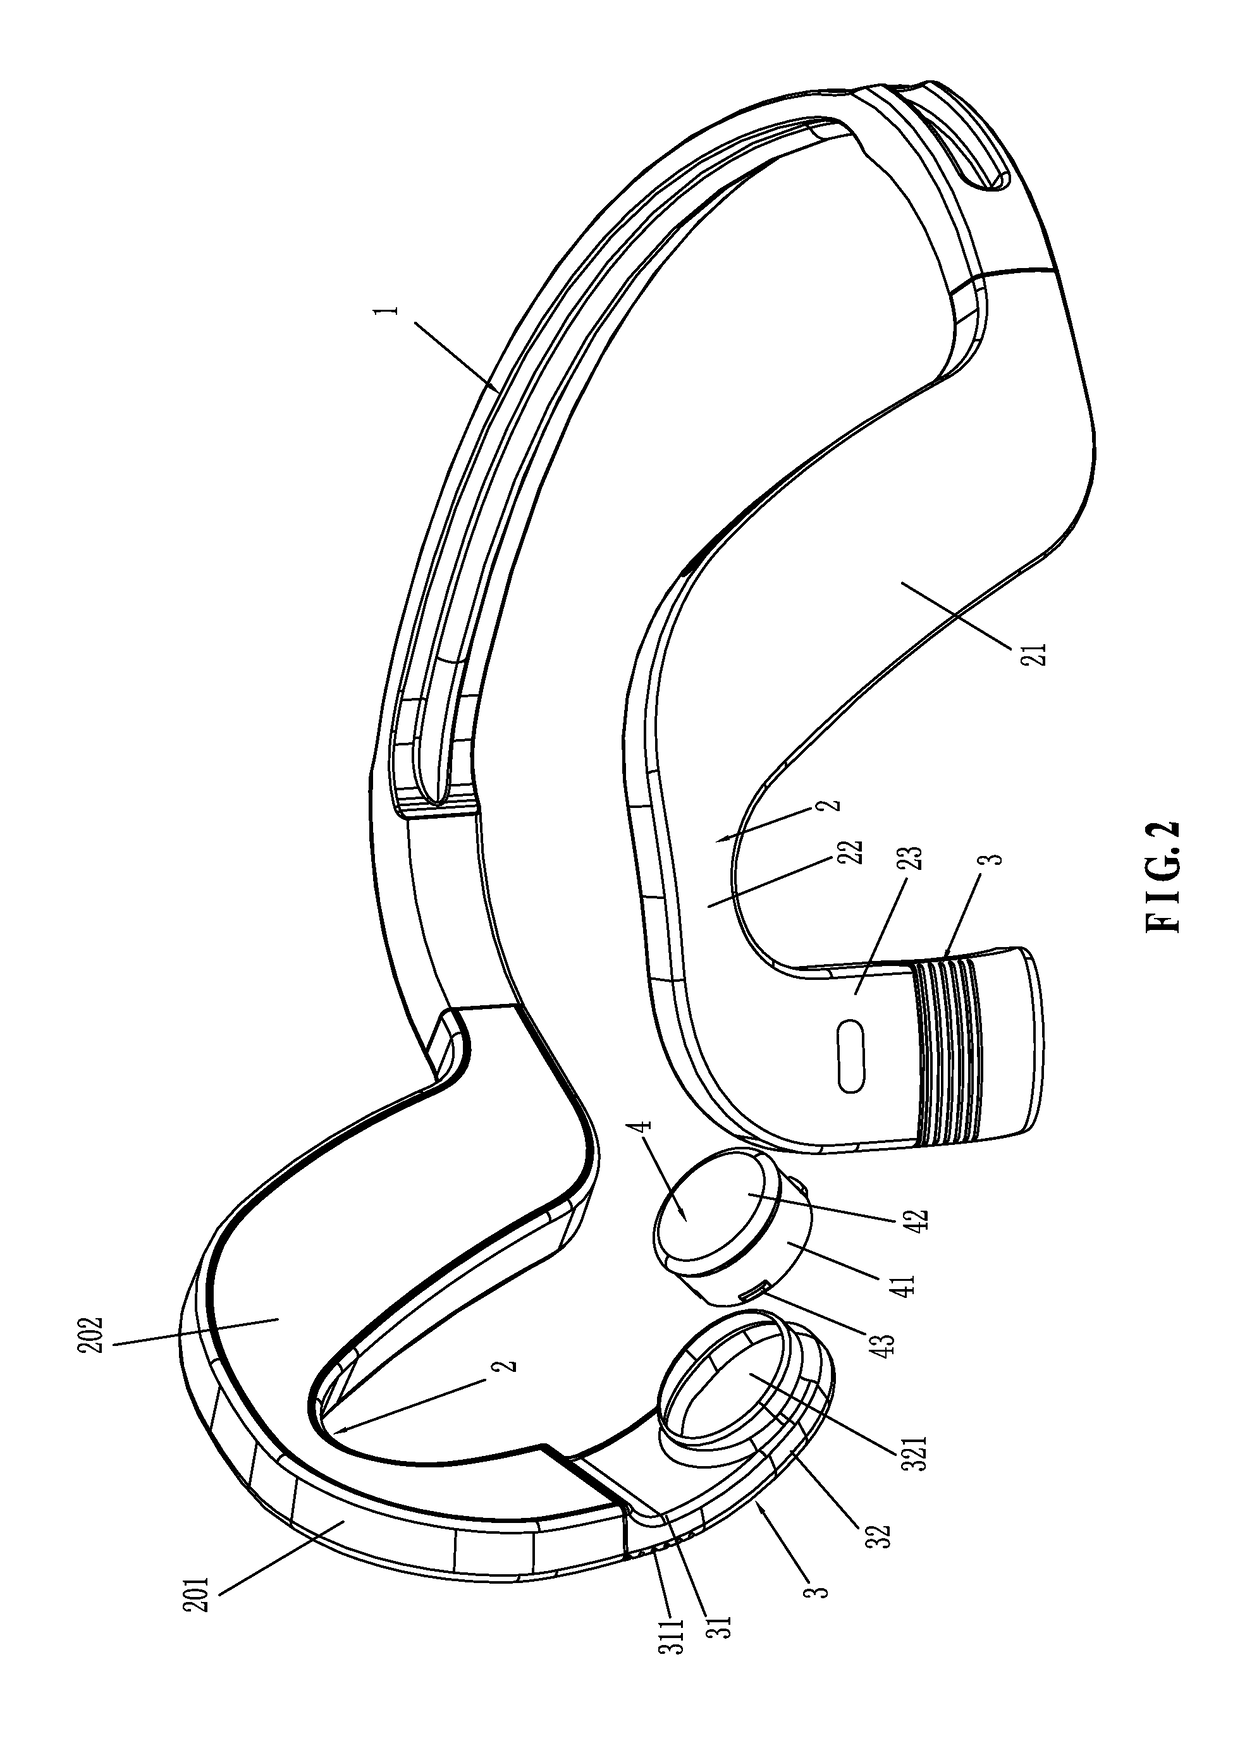 Freely adjustable ergonomic bone conduction earphone rack